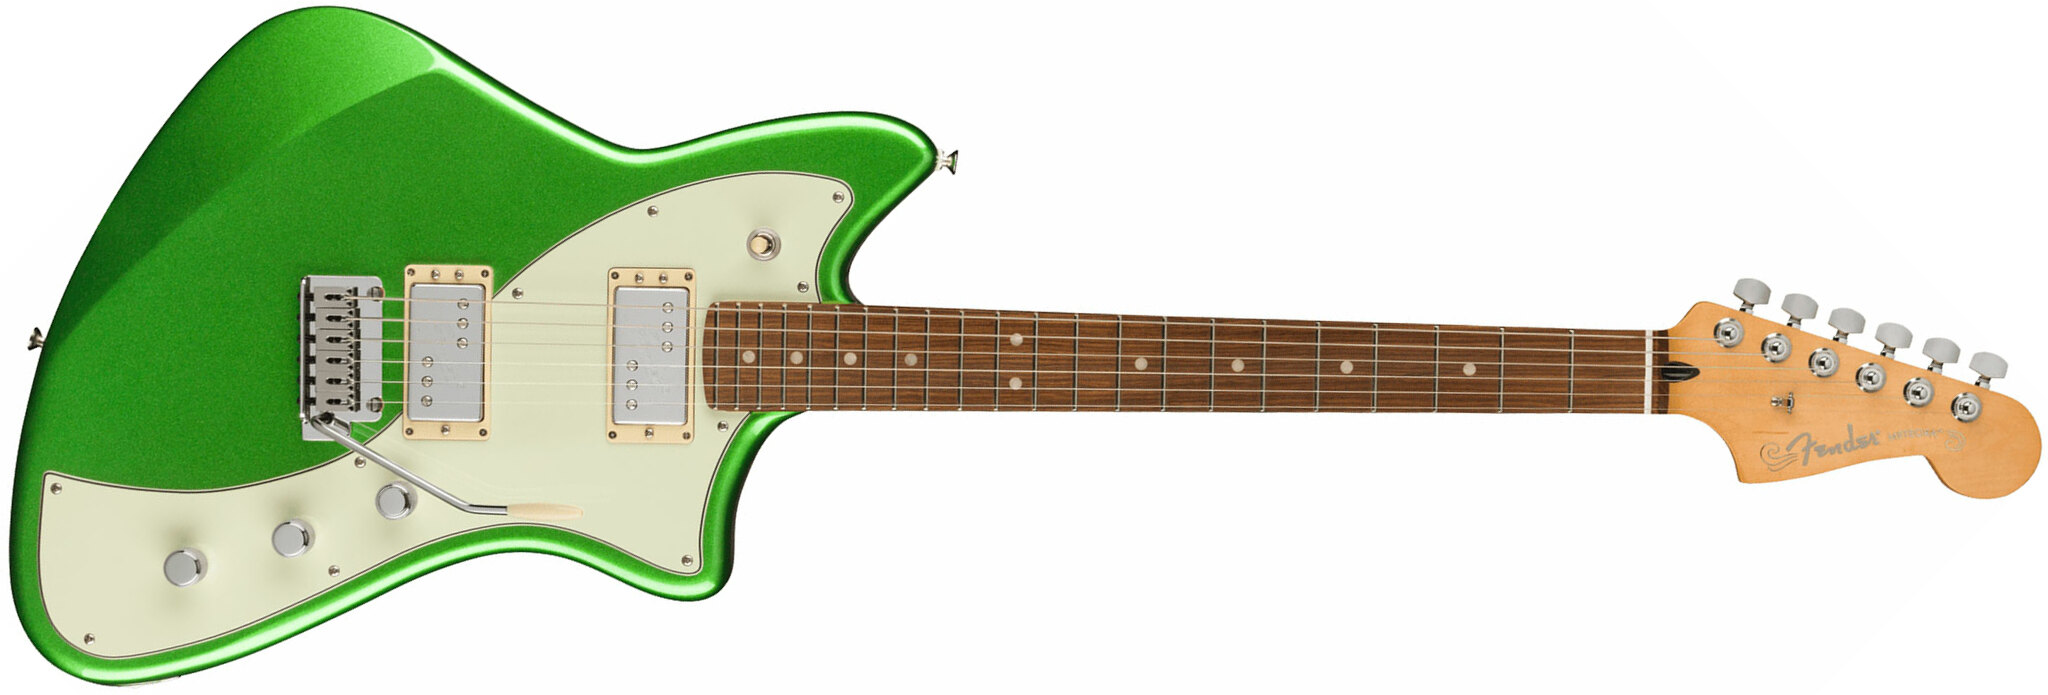 Fender Meteora Player Plus Hh Mex 2h Ht Pf - Cosmic Jade - Retro rock electric guitar - Main picture